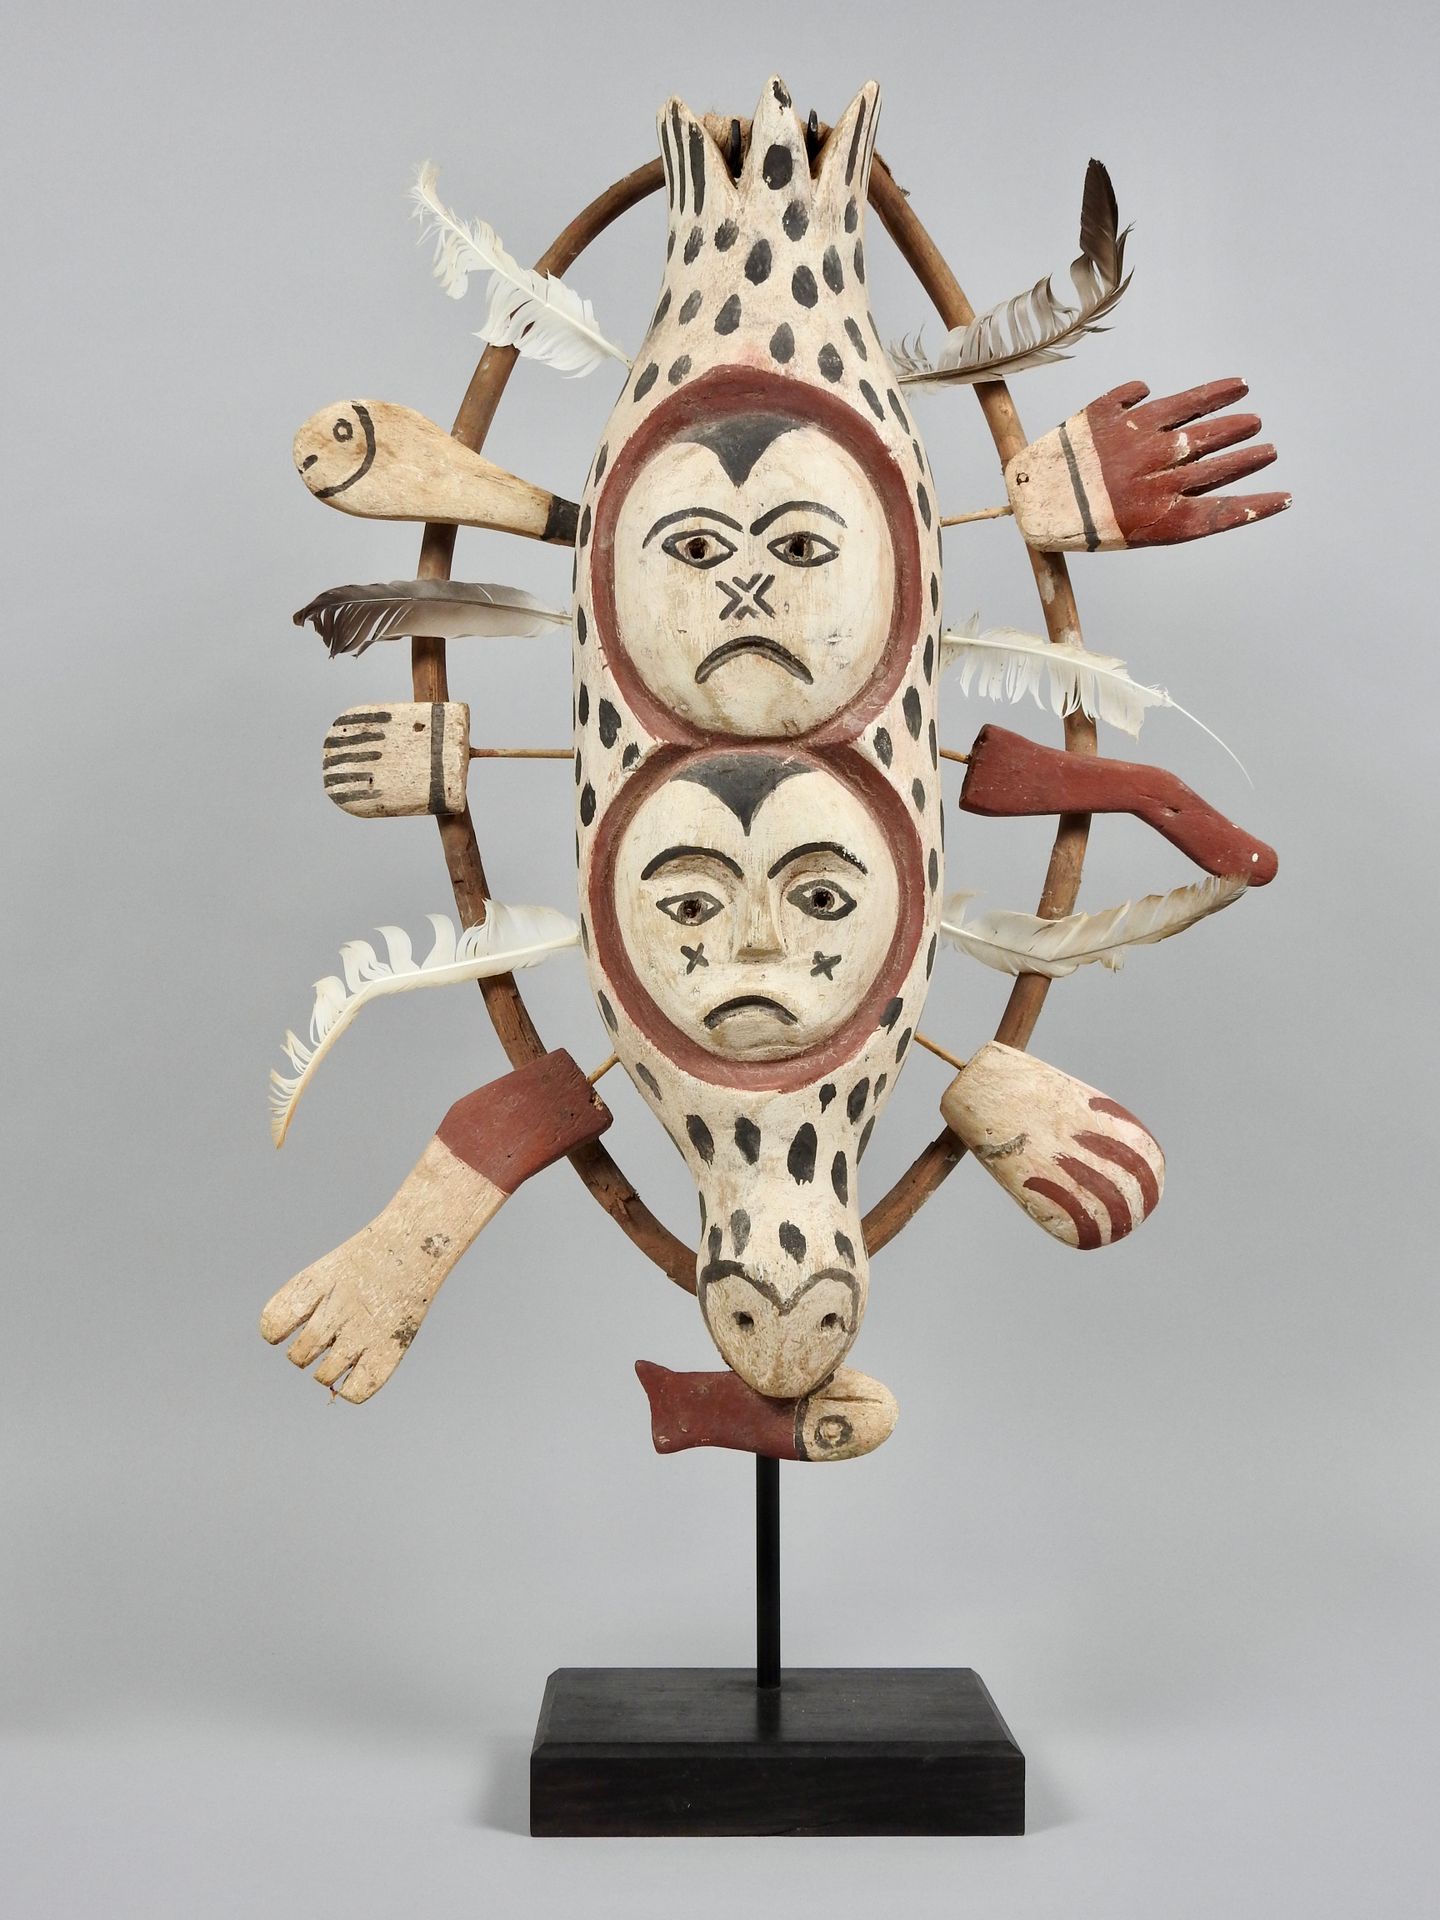 Null 
爱斯基摩风格，美洲因纽特人的精神面具

雕刻的木头和篮子

高48厘米左右。



采用捕梦器的形式，由一只正在吃鱼的海豹组成，其身上画着两张脸，可&hellip;